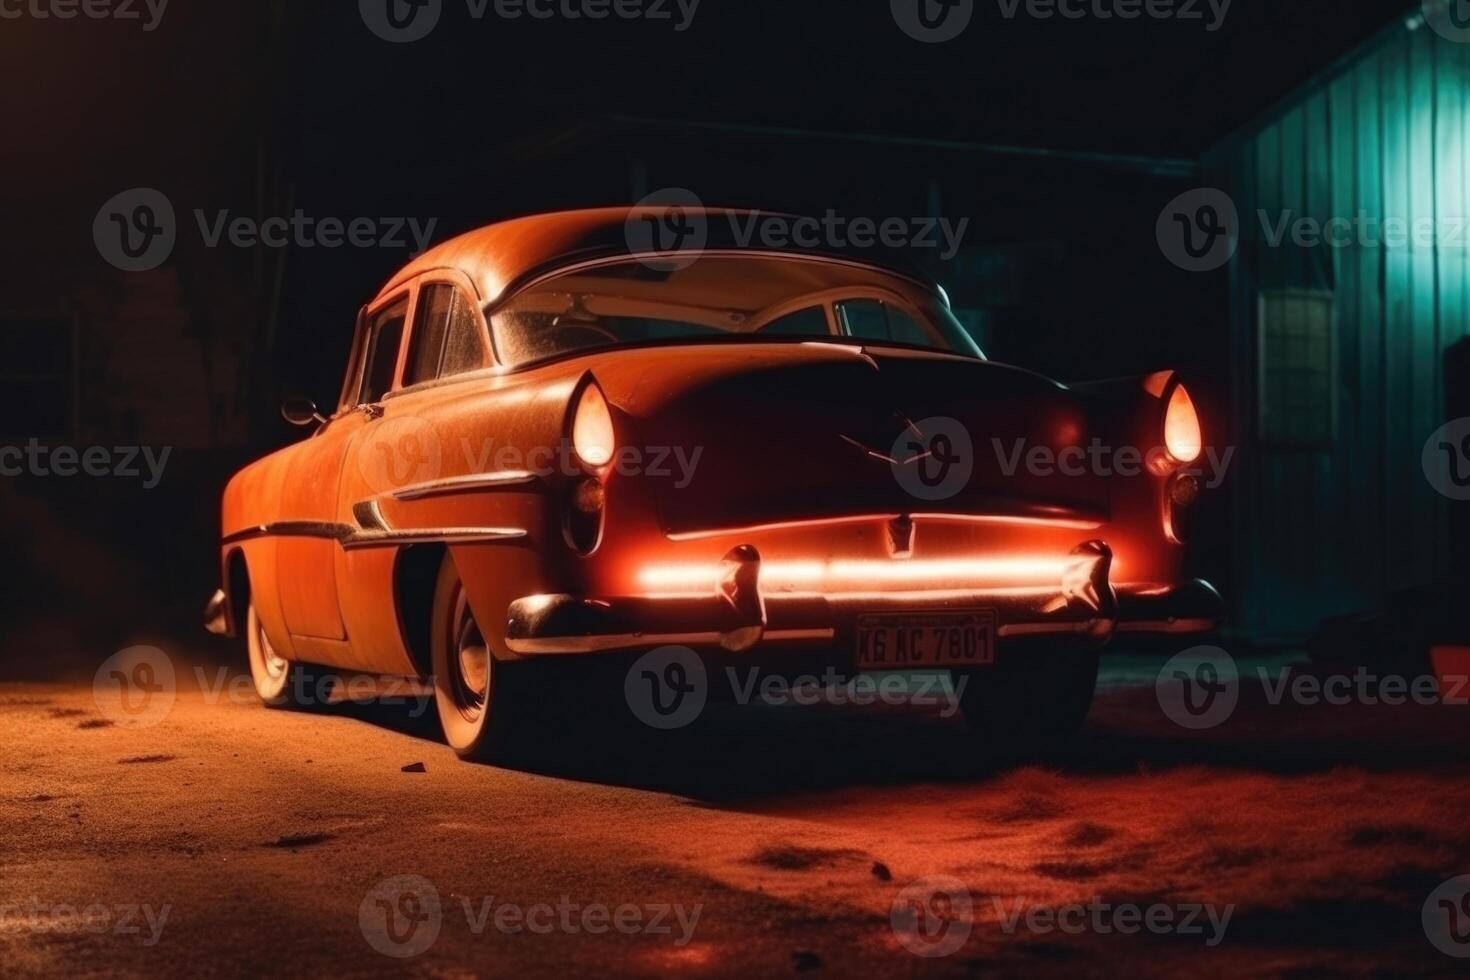 Illuminated retro classic car at night. photo